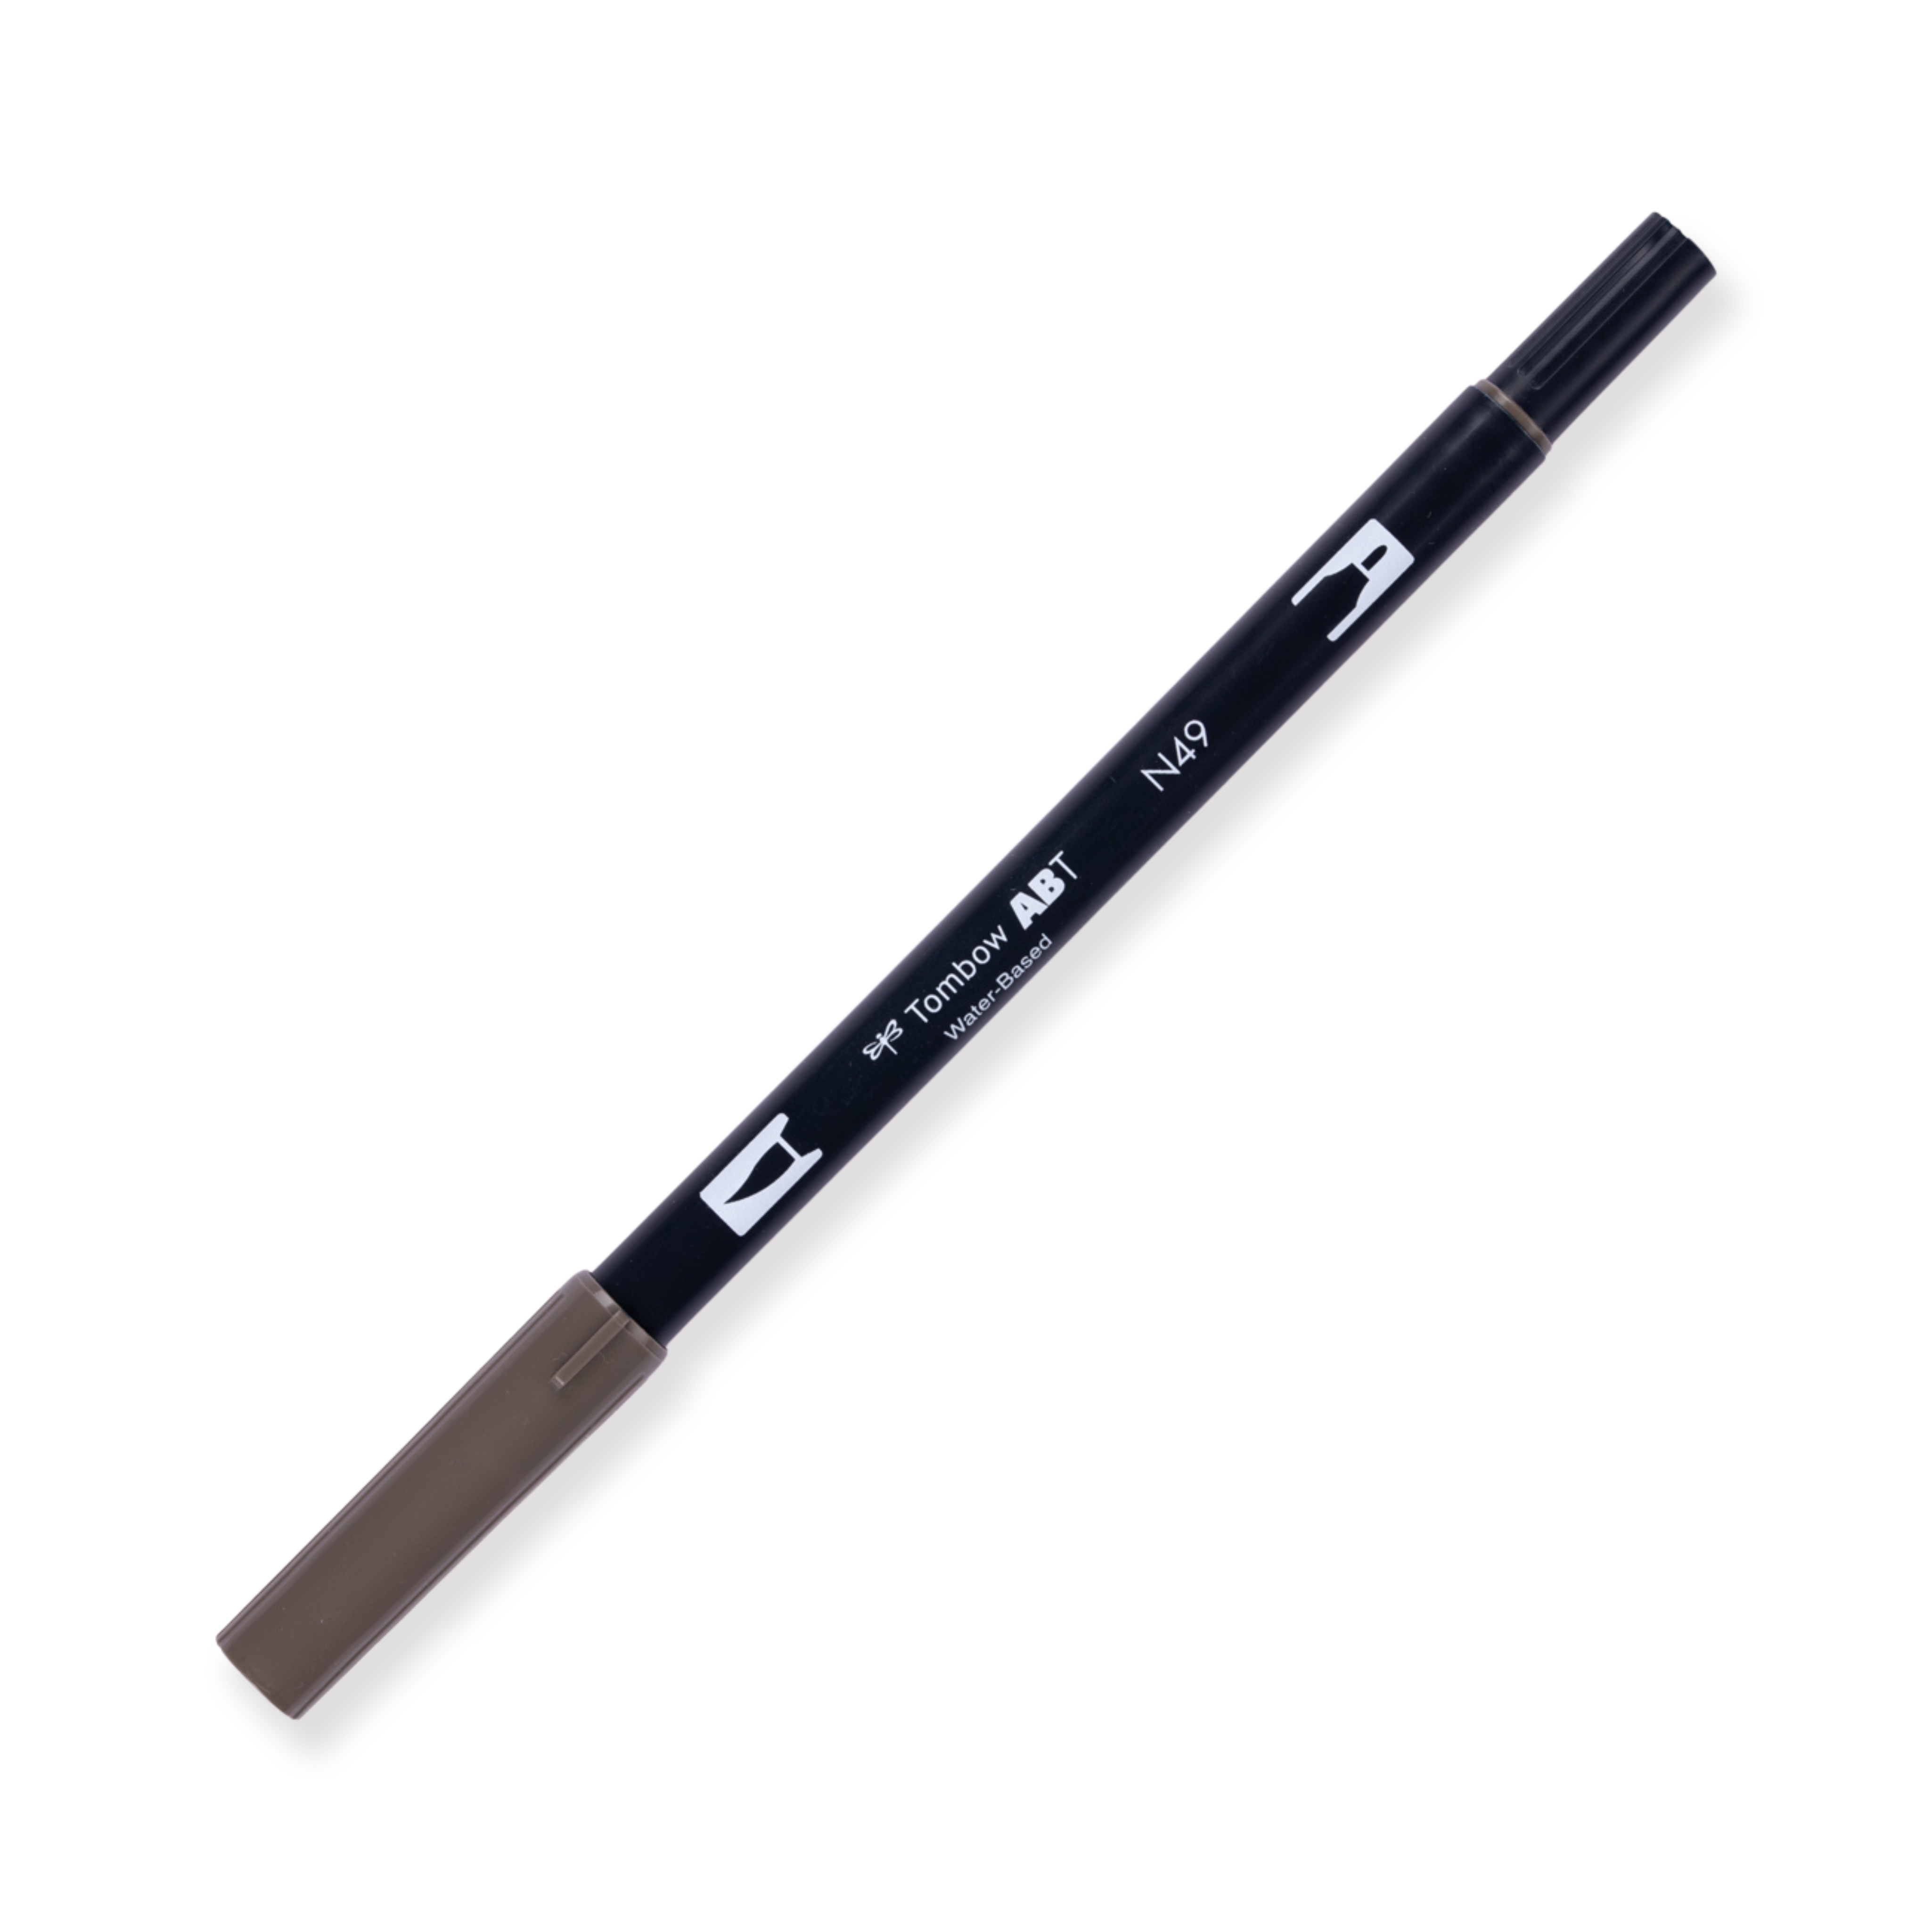 Rotulador Tombow Dual Brush en escala de grises - N49 - Gris cálido 8